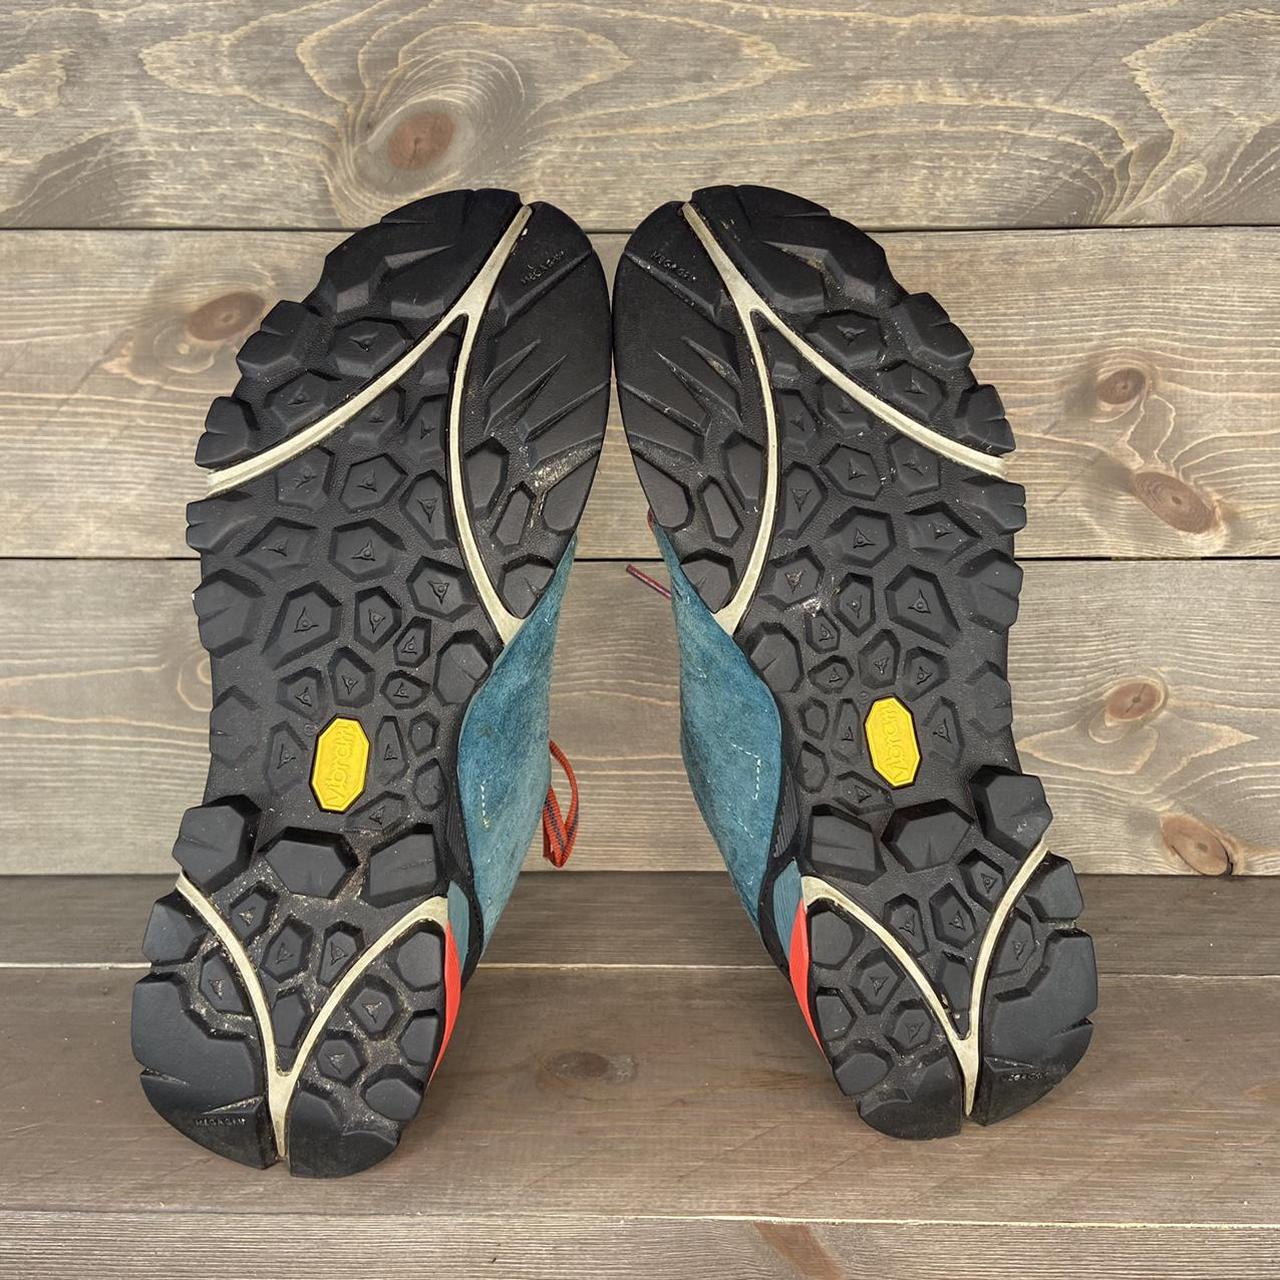 Product Image 3 - Merrell Capra hiking shoes

Women’s size